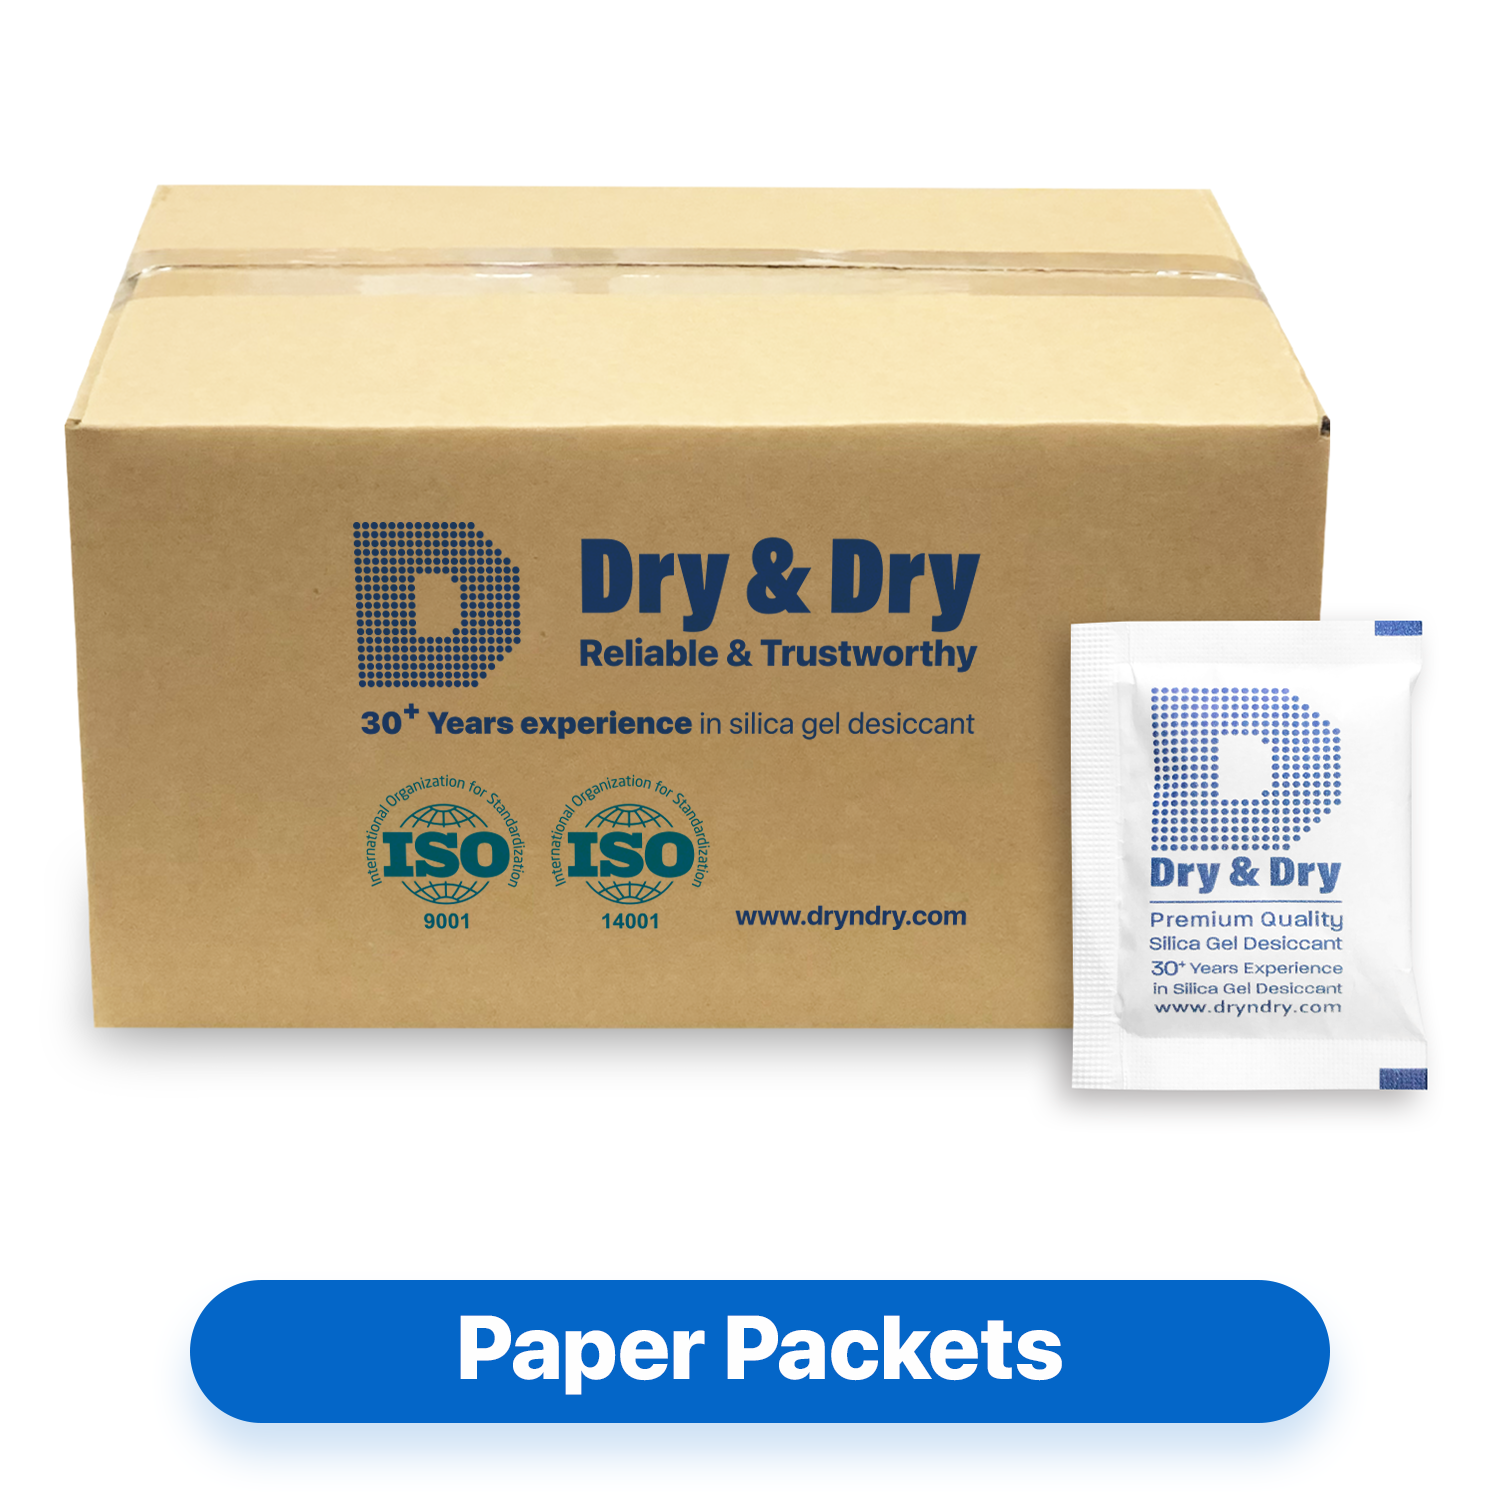 10 Gram [1,600 Packets] Premium Silica Gel Desiccant Packets - Rechargeable Paper(FDA Compliant)